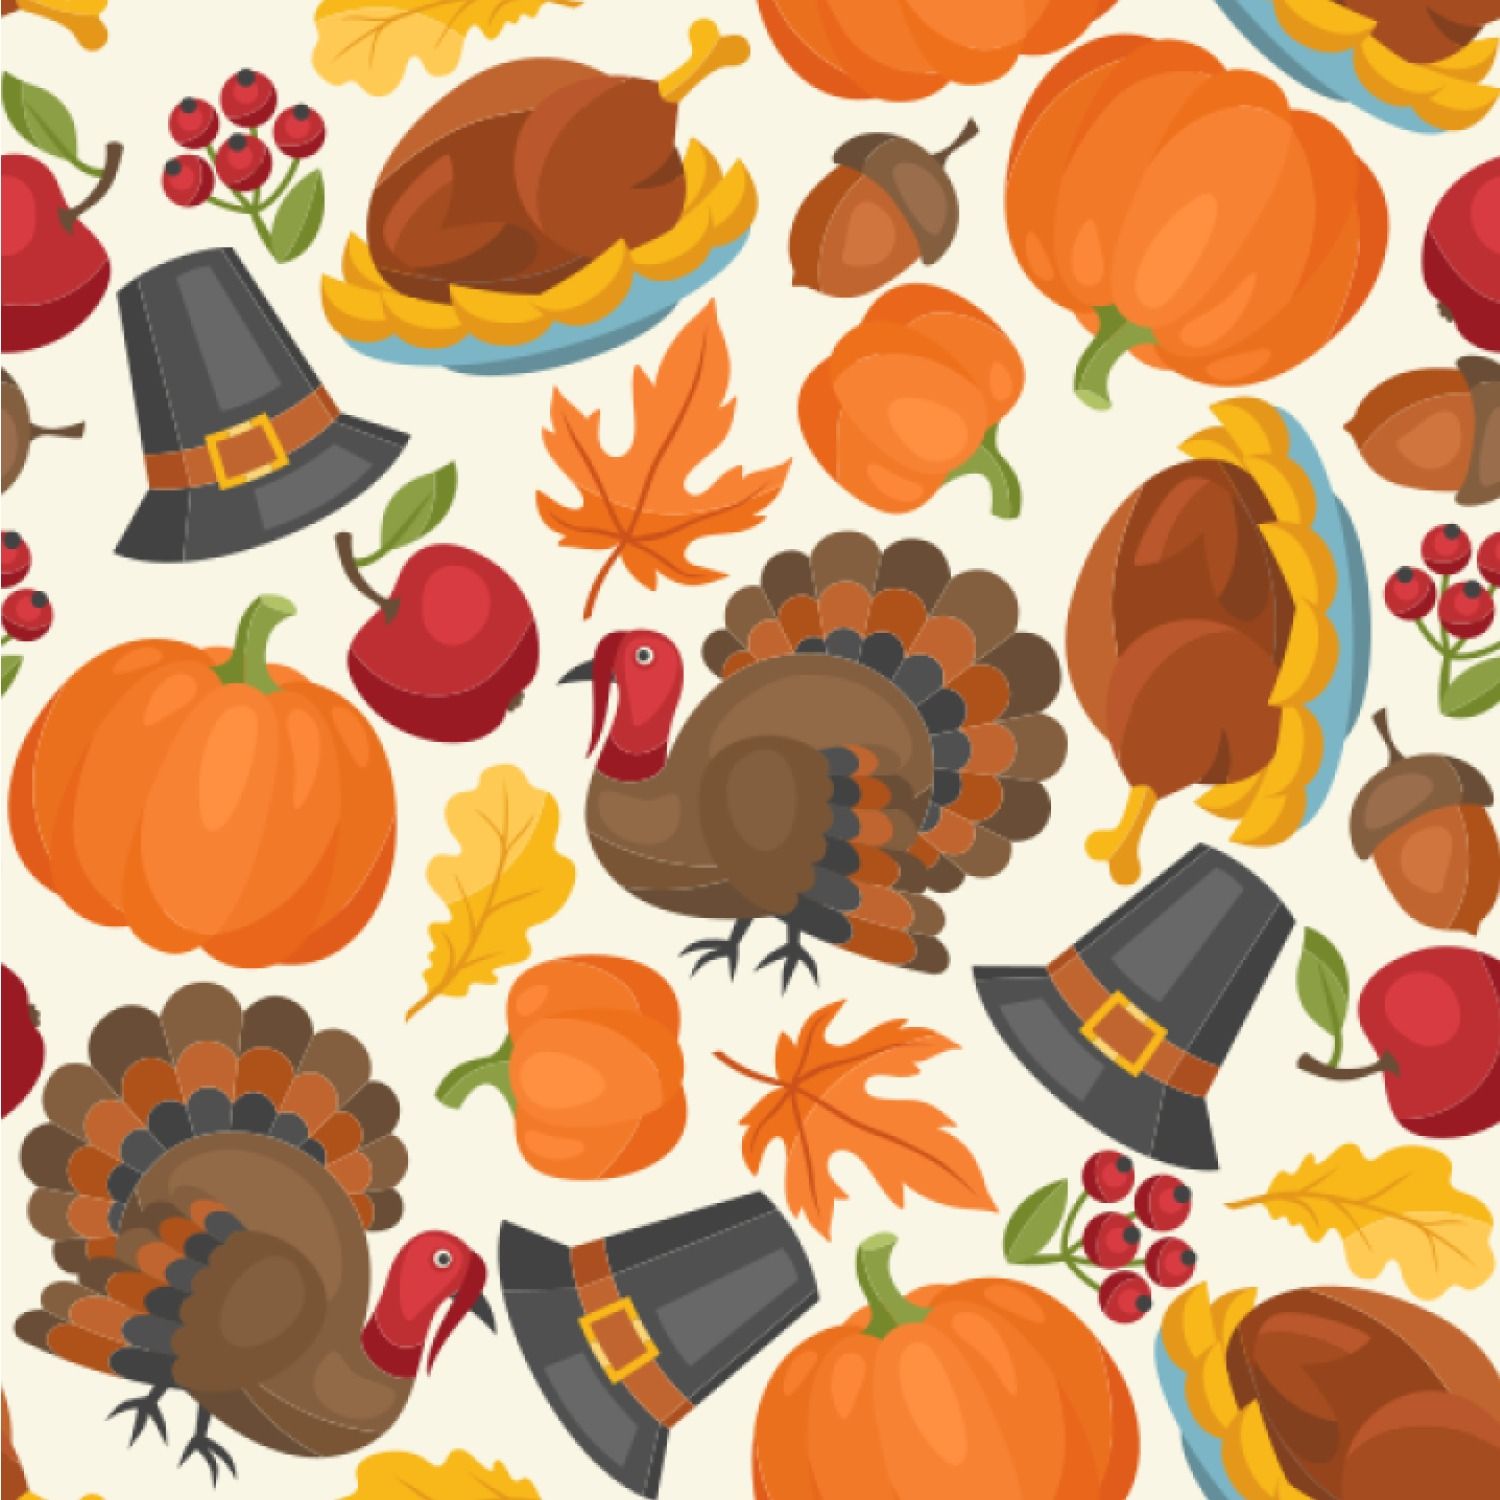 A seamless pattern of thanksgiving turkeys, pumpkins and apples - Thanksgiving